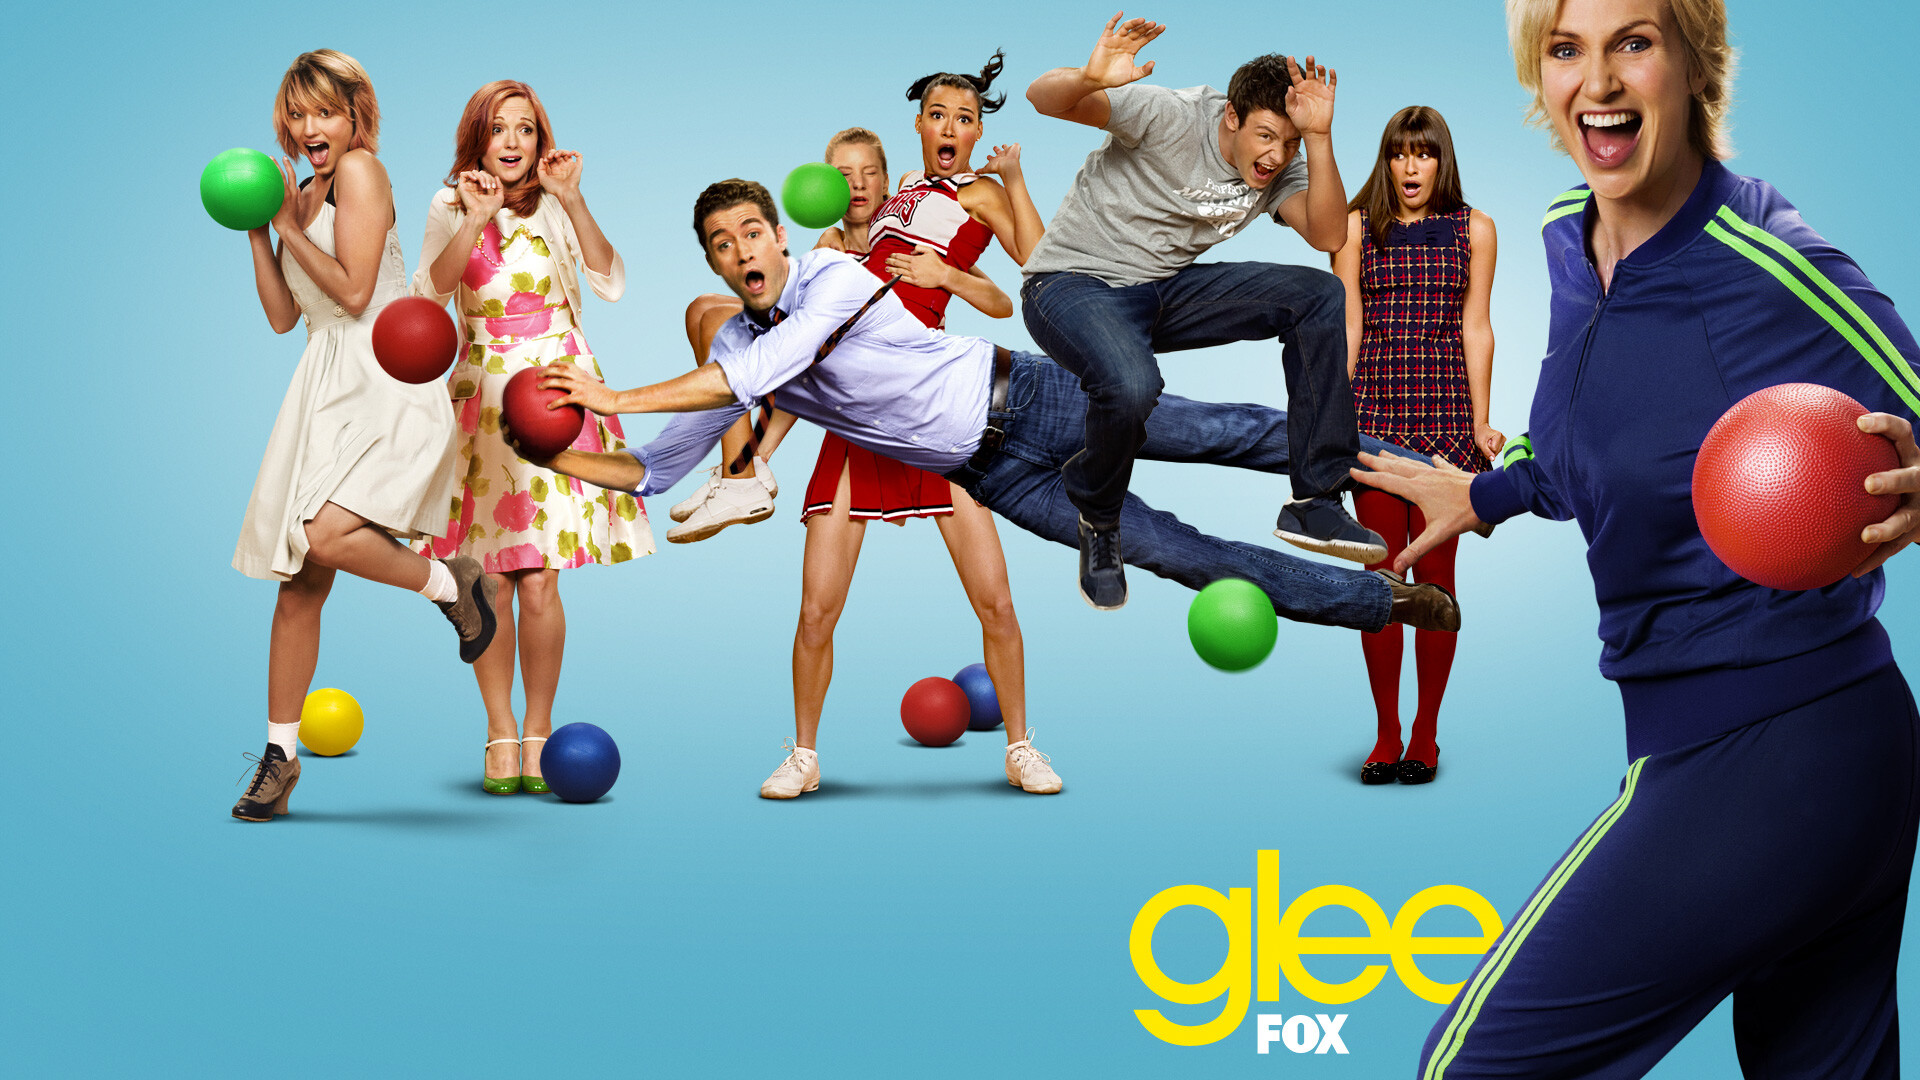 Glee (TV series): Dianna Agron as Quinn Fabray, Jayma Mays as Emma Pillsbury, Matthew Morrison as Will Schuester. 1920x1080 Full HD Wallpaper.